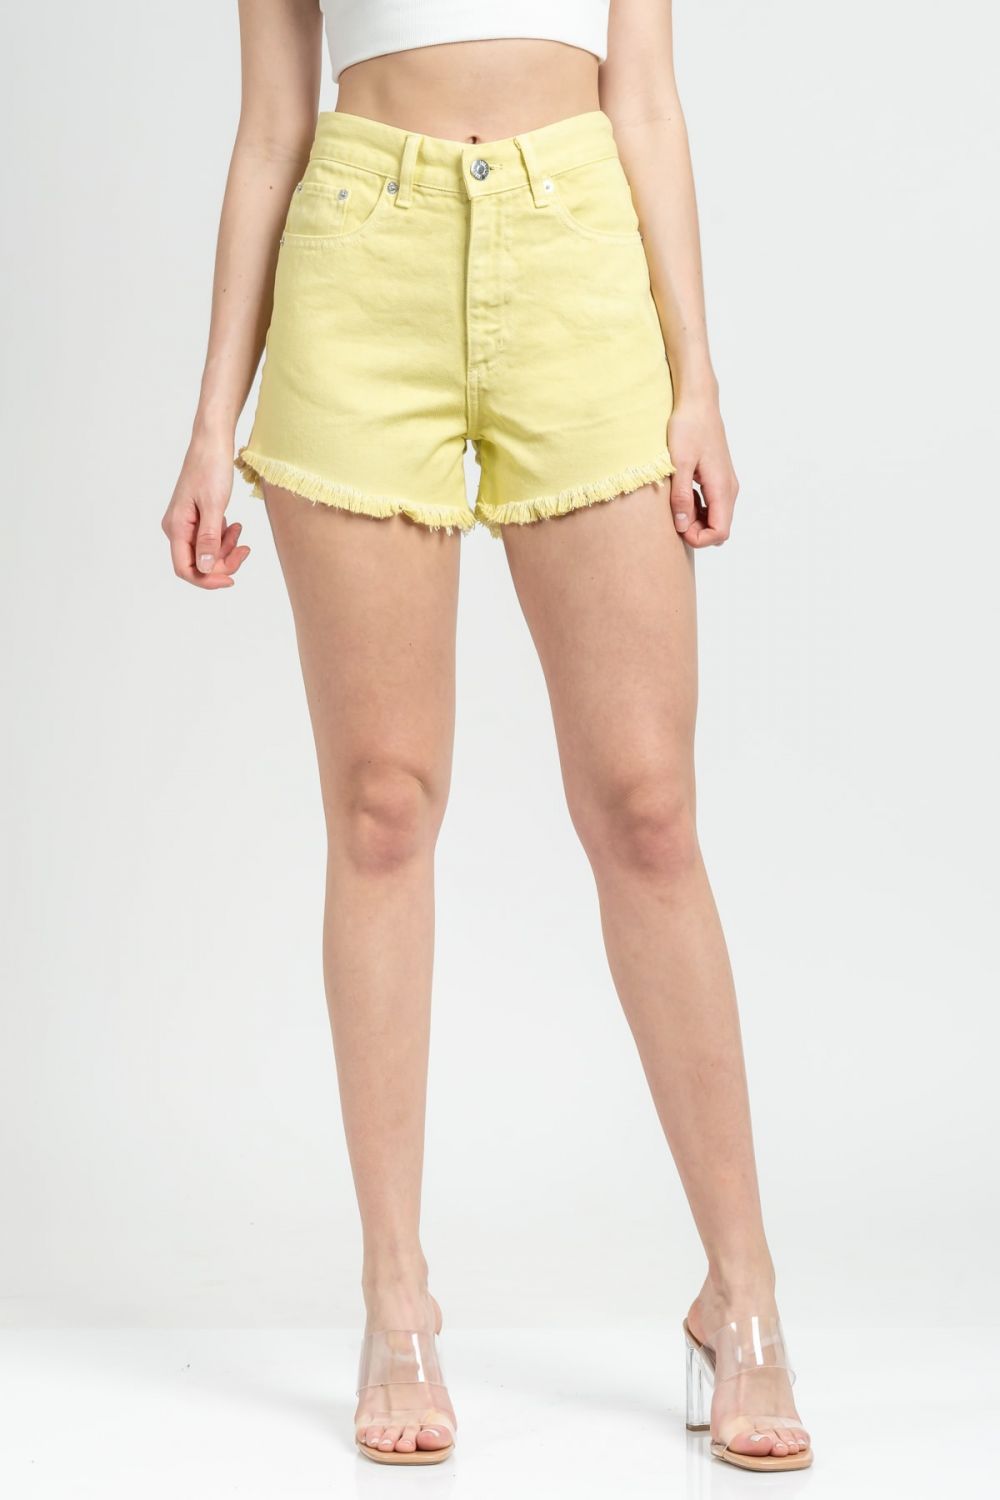 Cher 04 studs yellow jean shorts